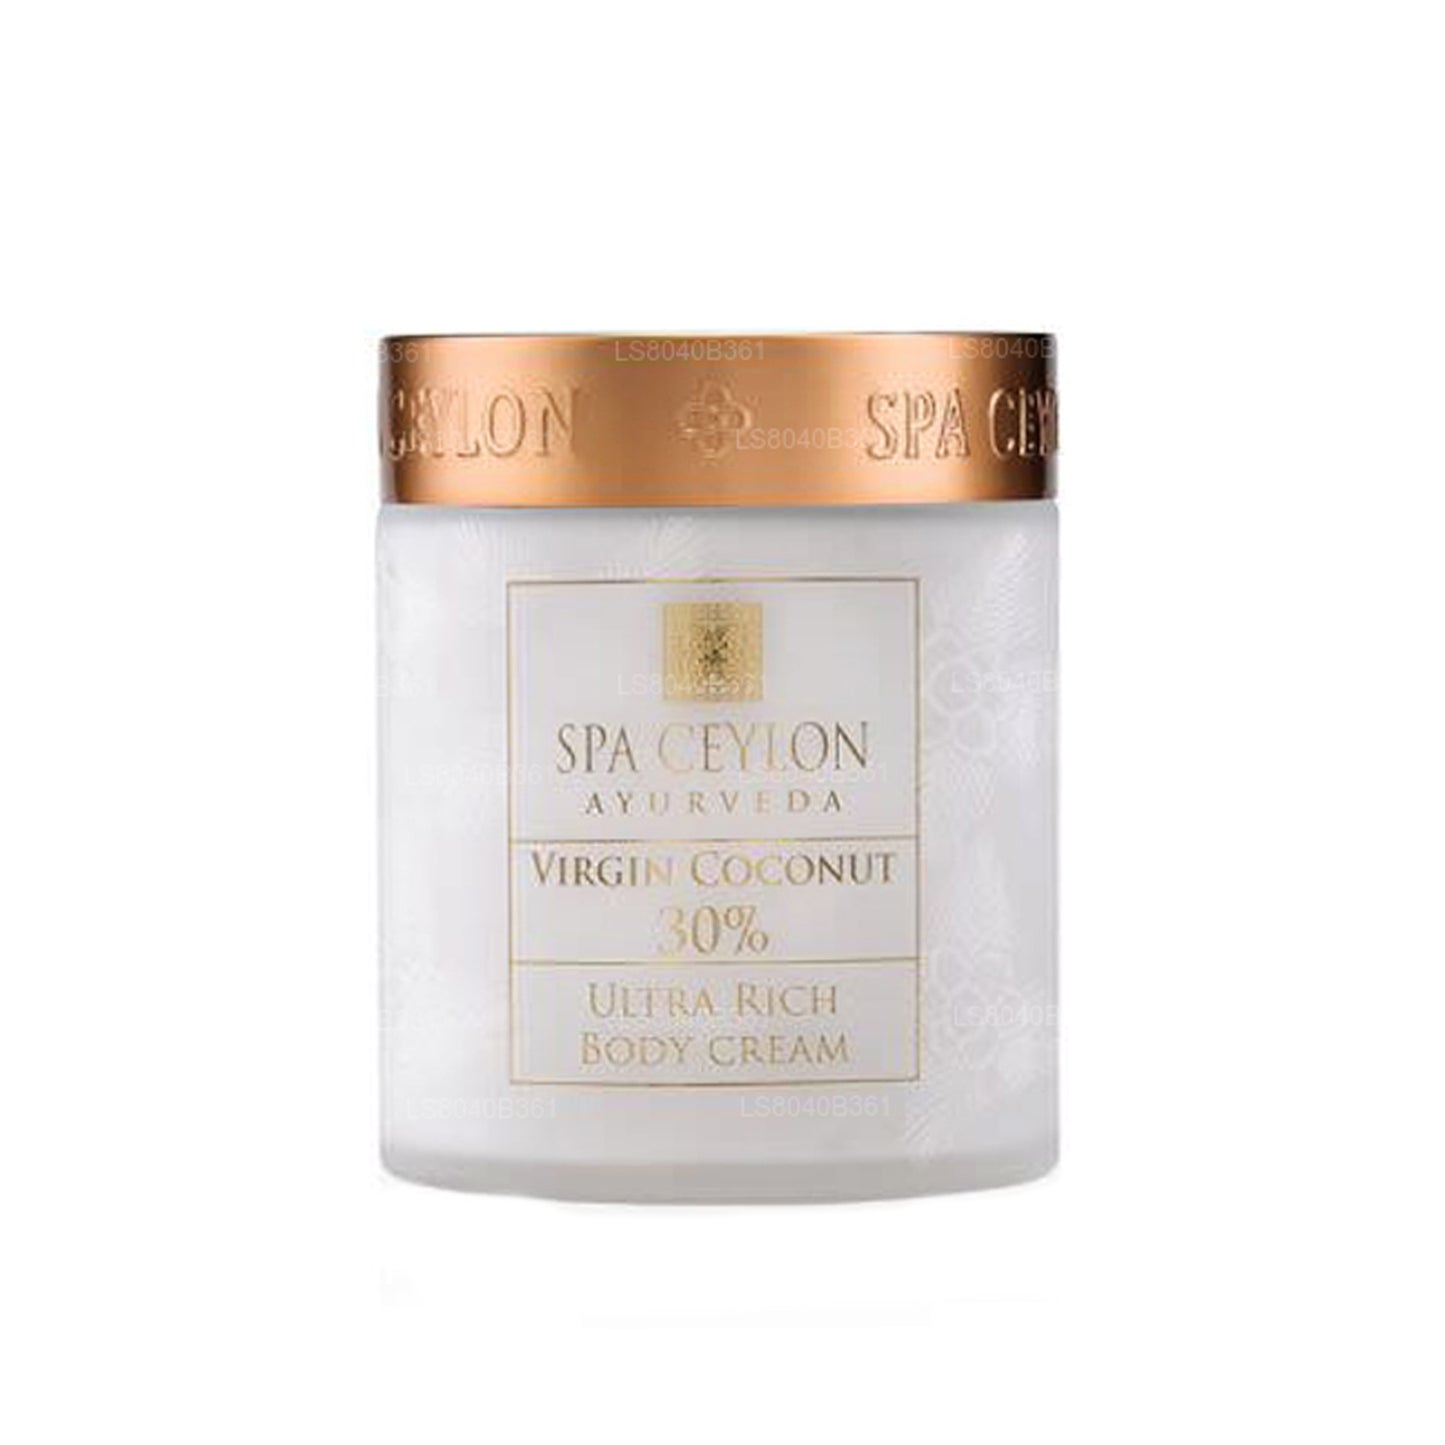 Spa Ceylon Virgin Coconut 30% - Ultra Rich Body Cream (200 g)